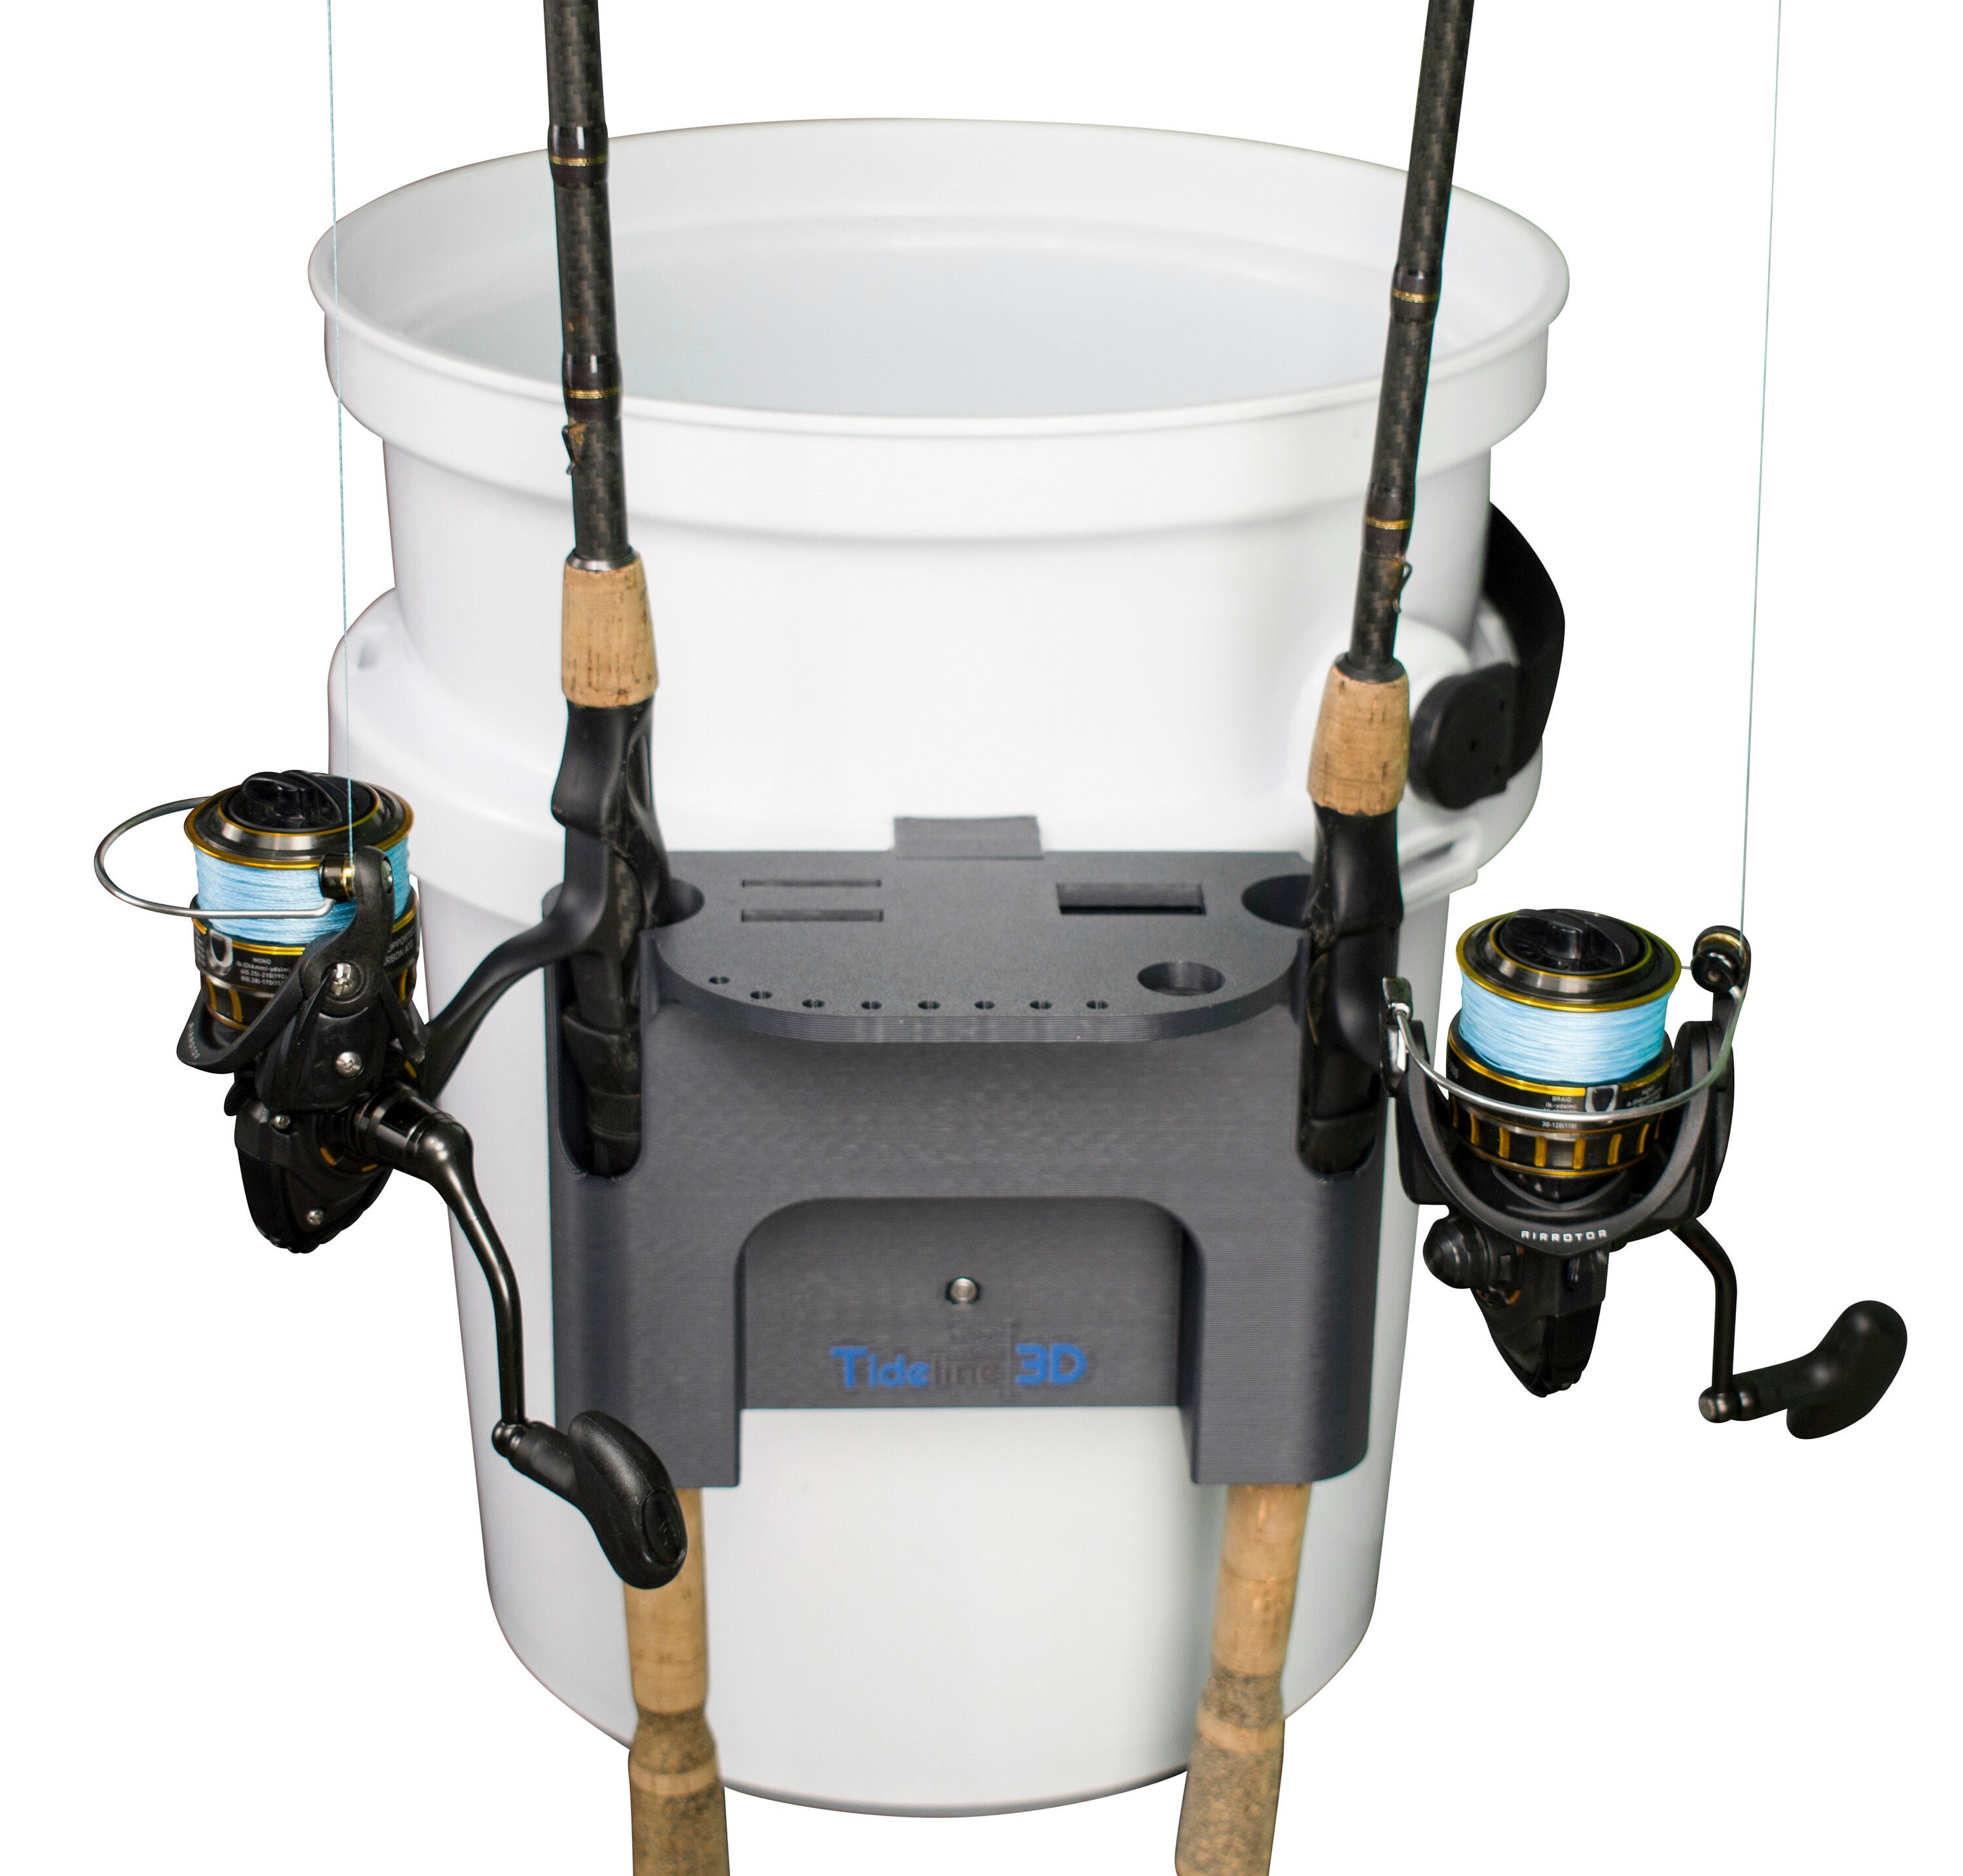 YETI Loadout Bucket Accessories Wrap - Steamer Fishing Design